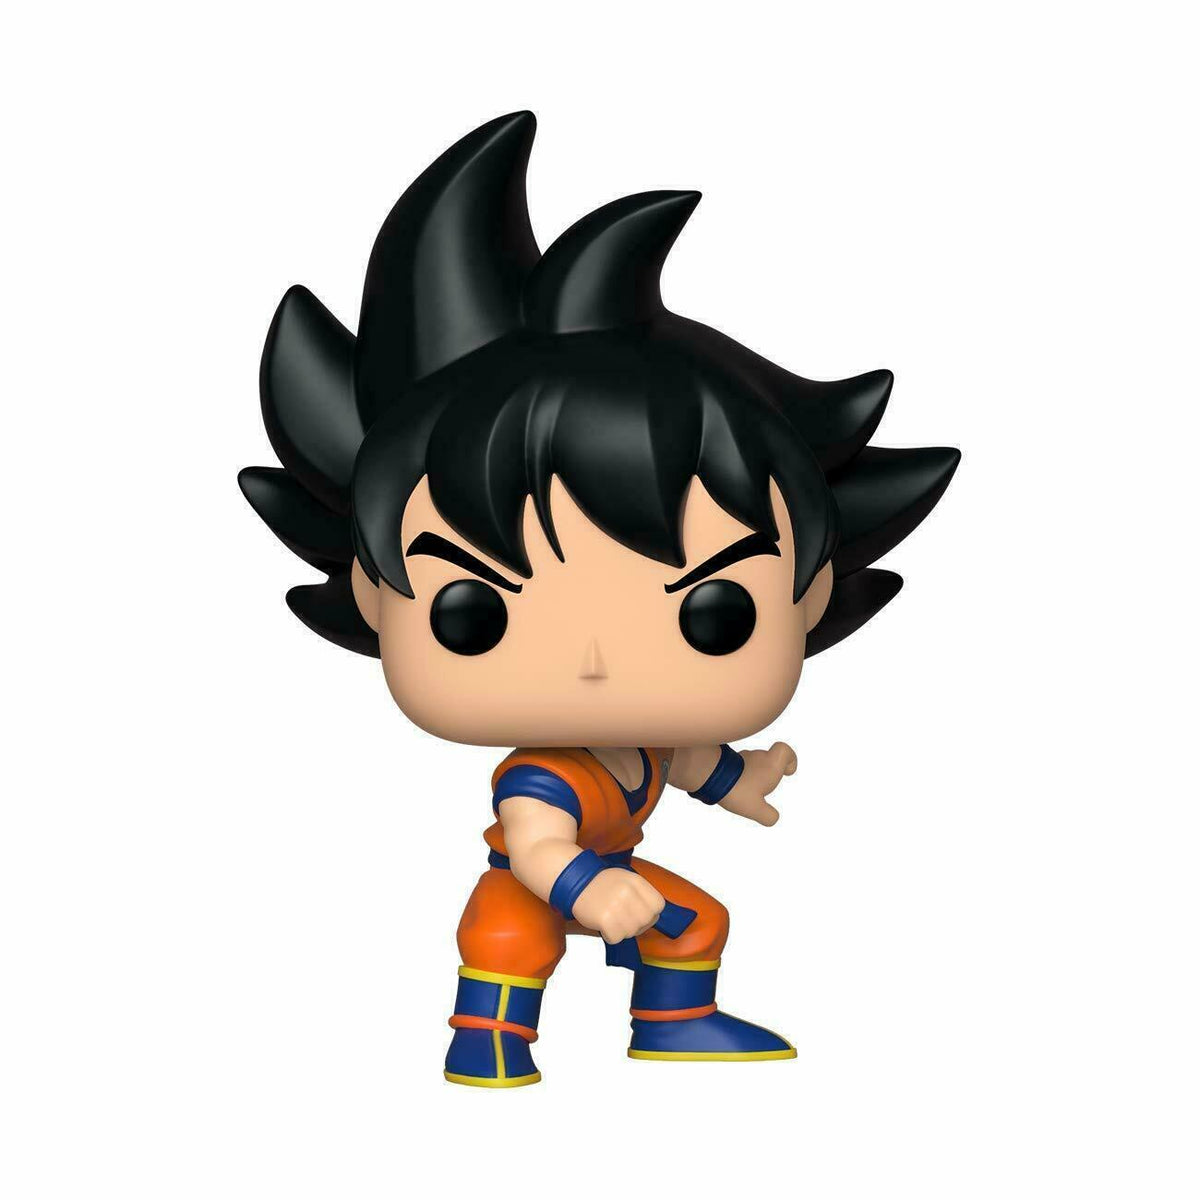 Goku - Dragonball - Funko POP!